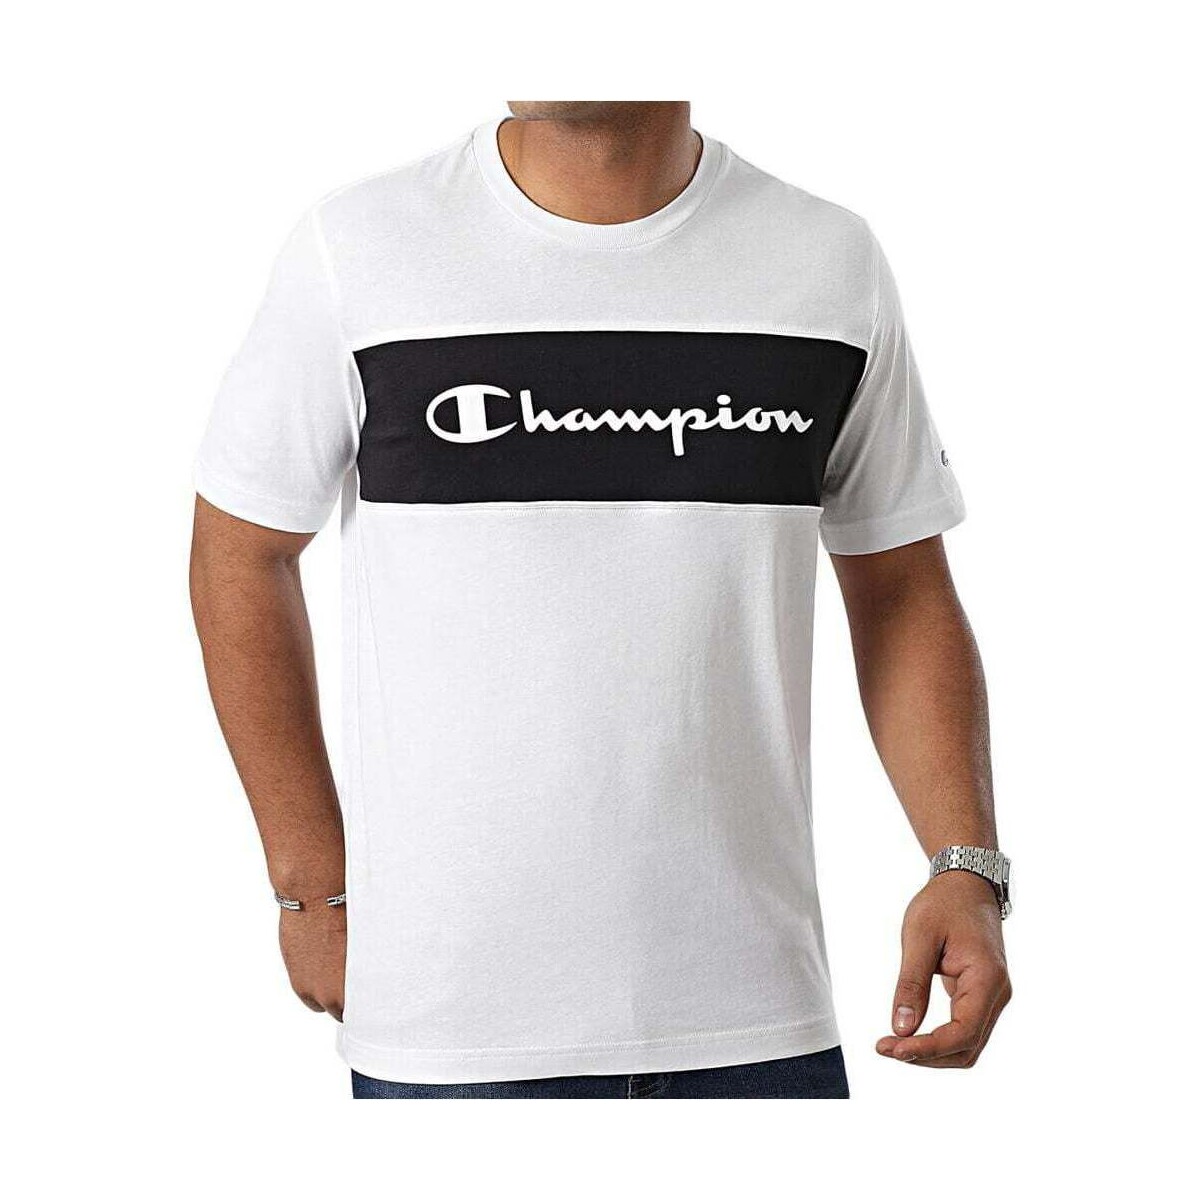 textil Hombre Polos manga corta Champion block T-shirt Blanco